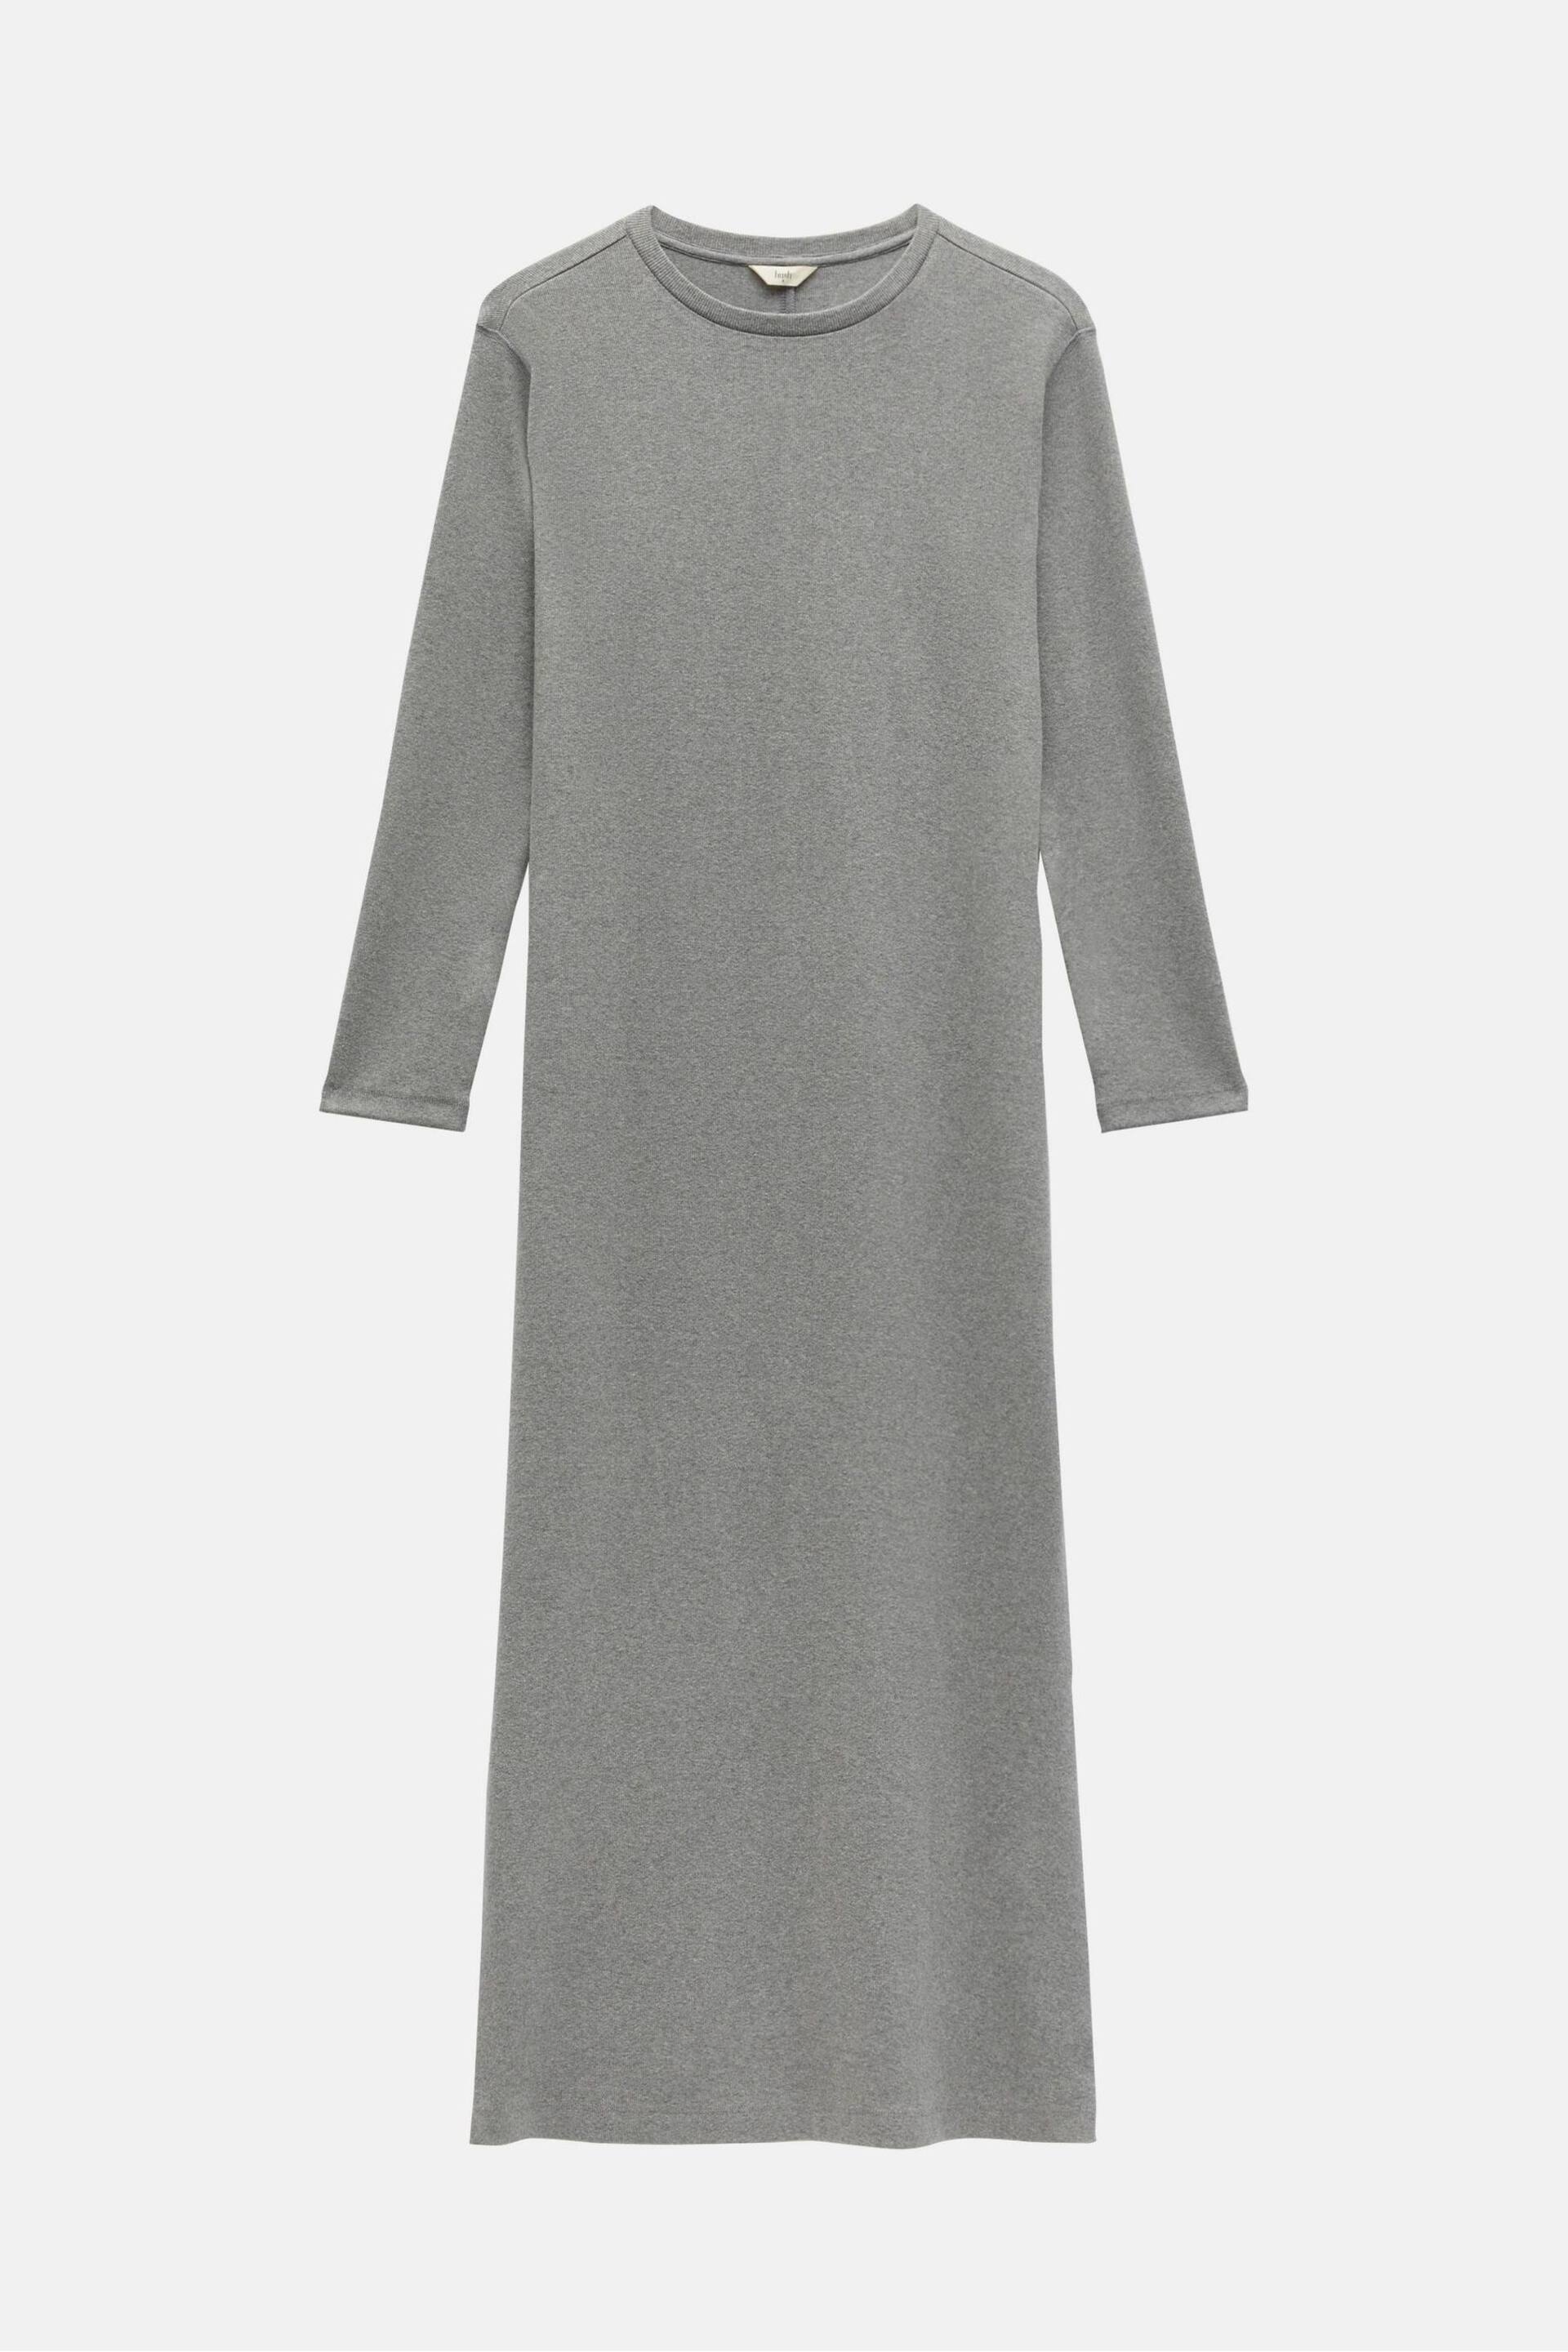 Hush Grey Mel Ribbed Maxi Jersey Dress - Image 5 of 5